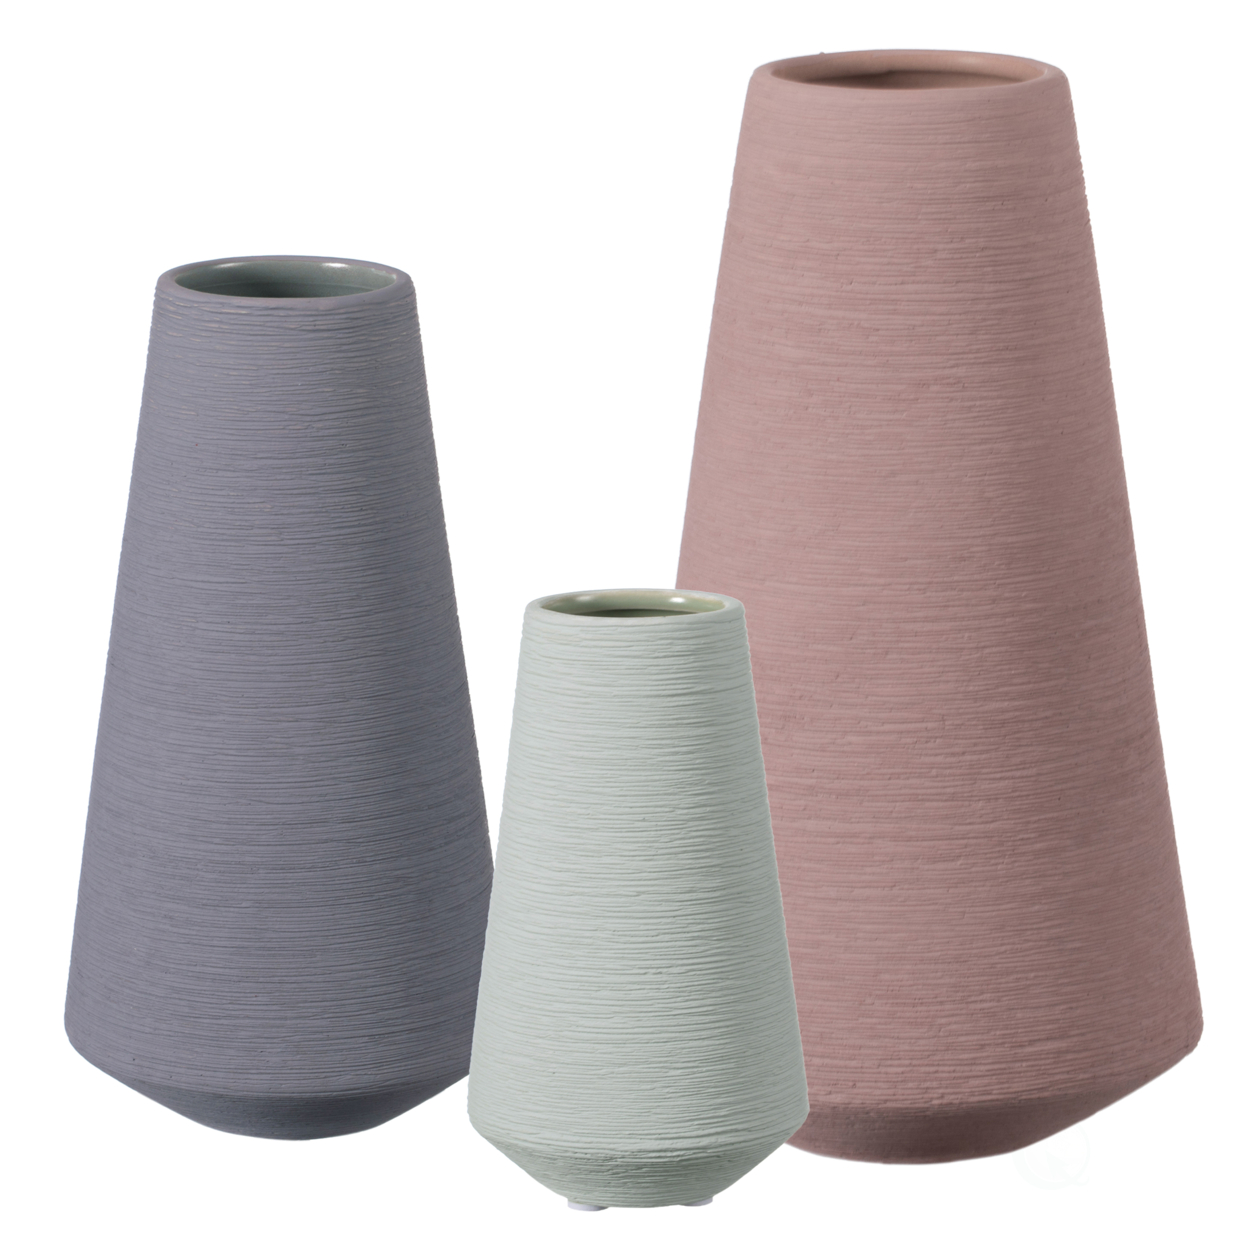 Decorative Ceramic Round Cone Shape Centerpiece Table Vase - Pink